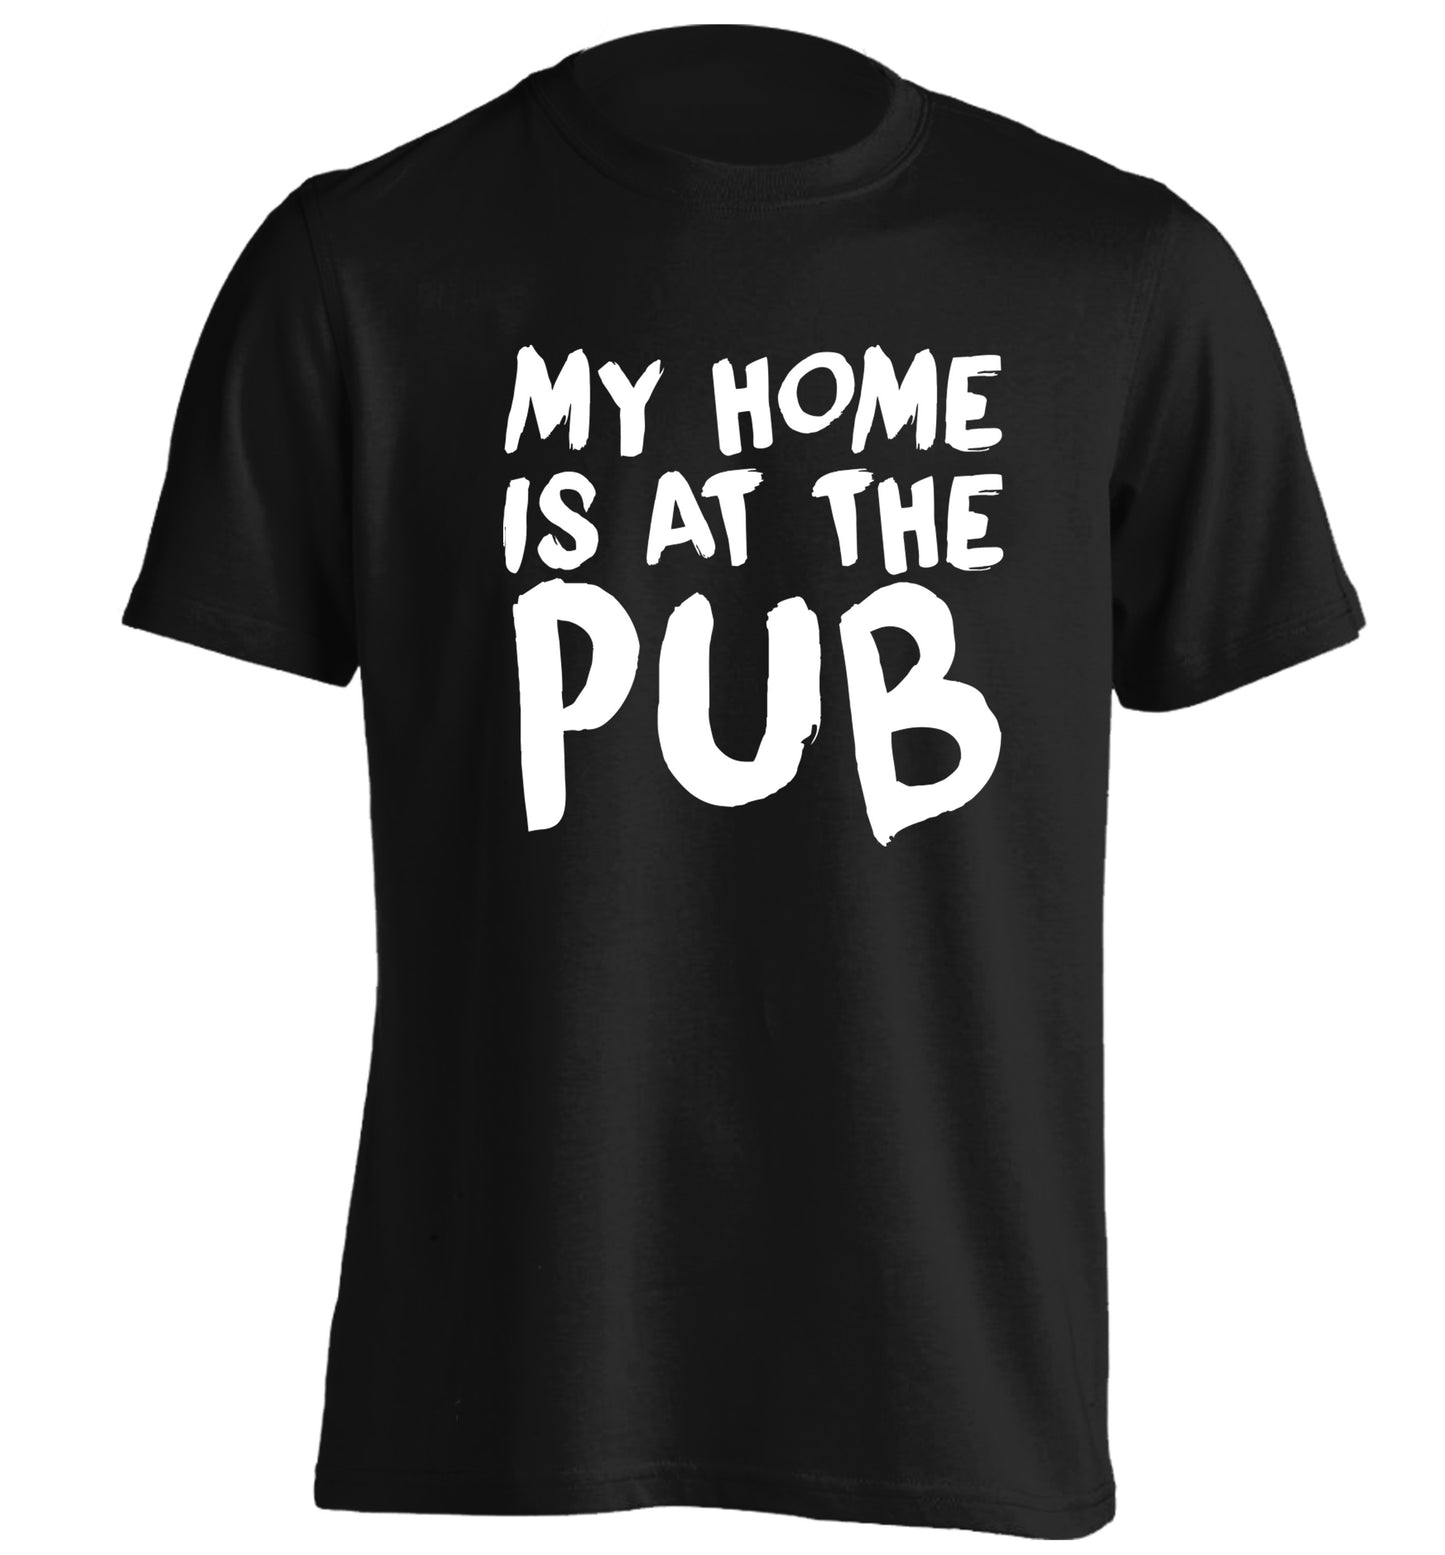 My home is at the pub adults unisex black Tshirt 2XL